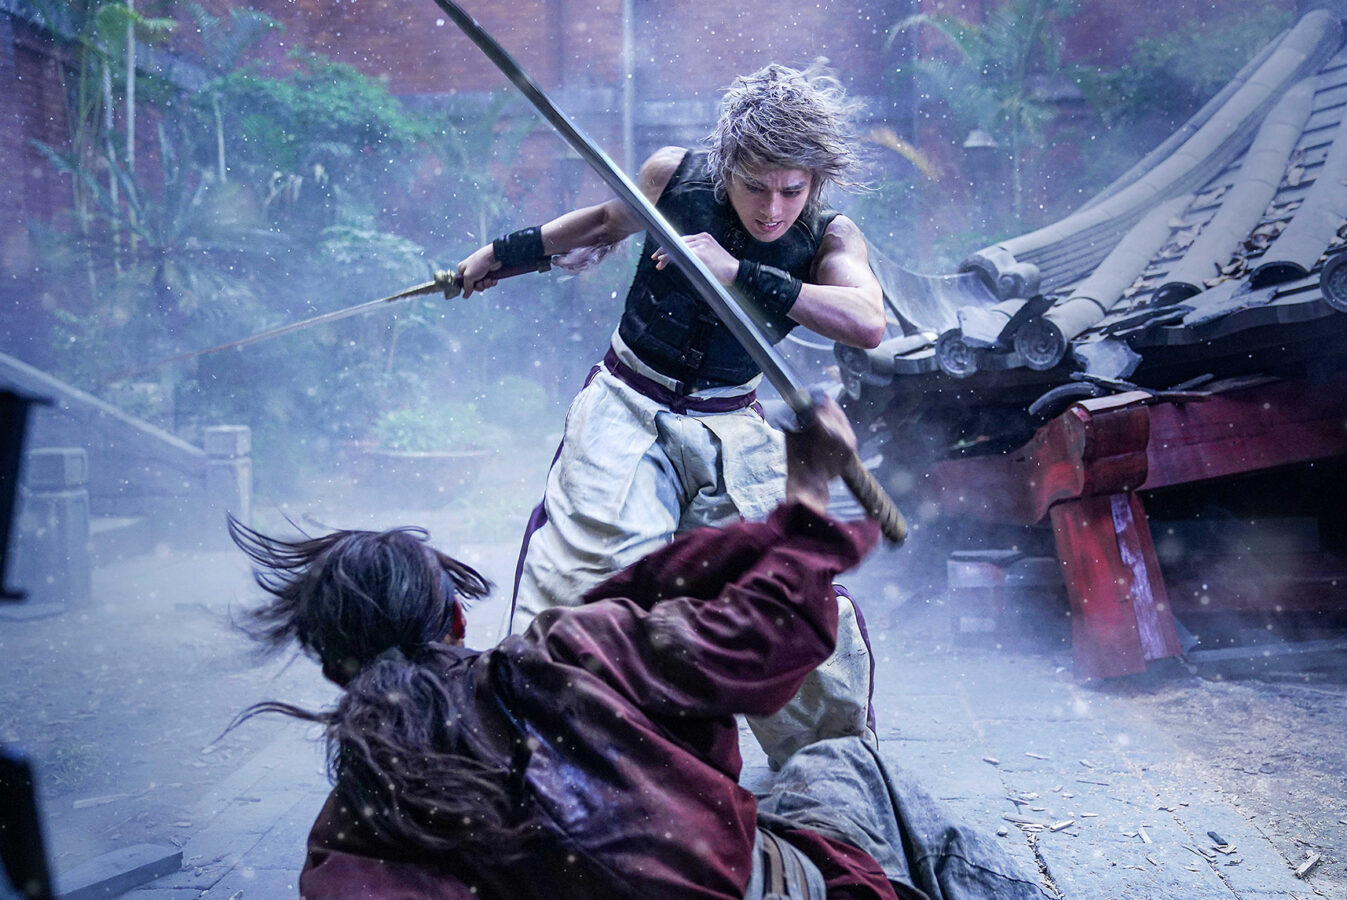 Film Review: Rurouni Kenshin Trilogy (2012, 2014) by Keishi Ohtomo